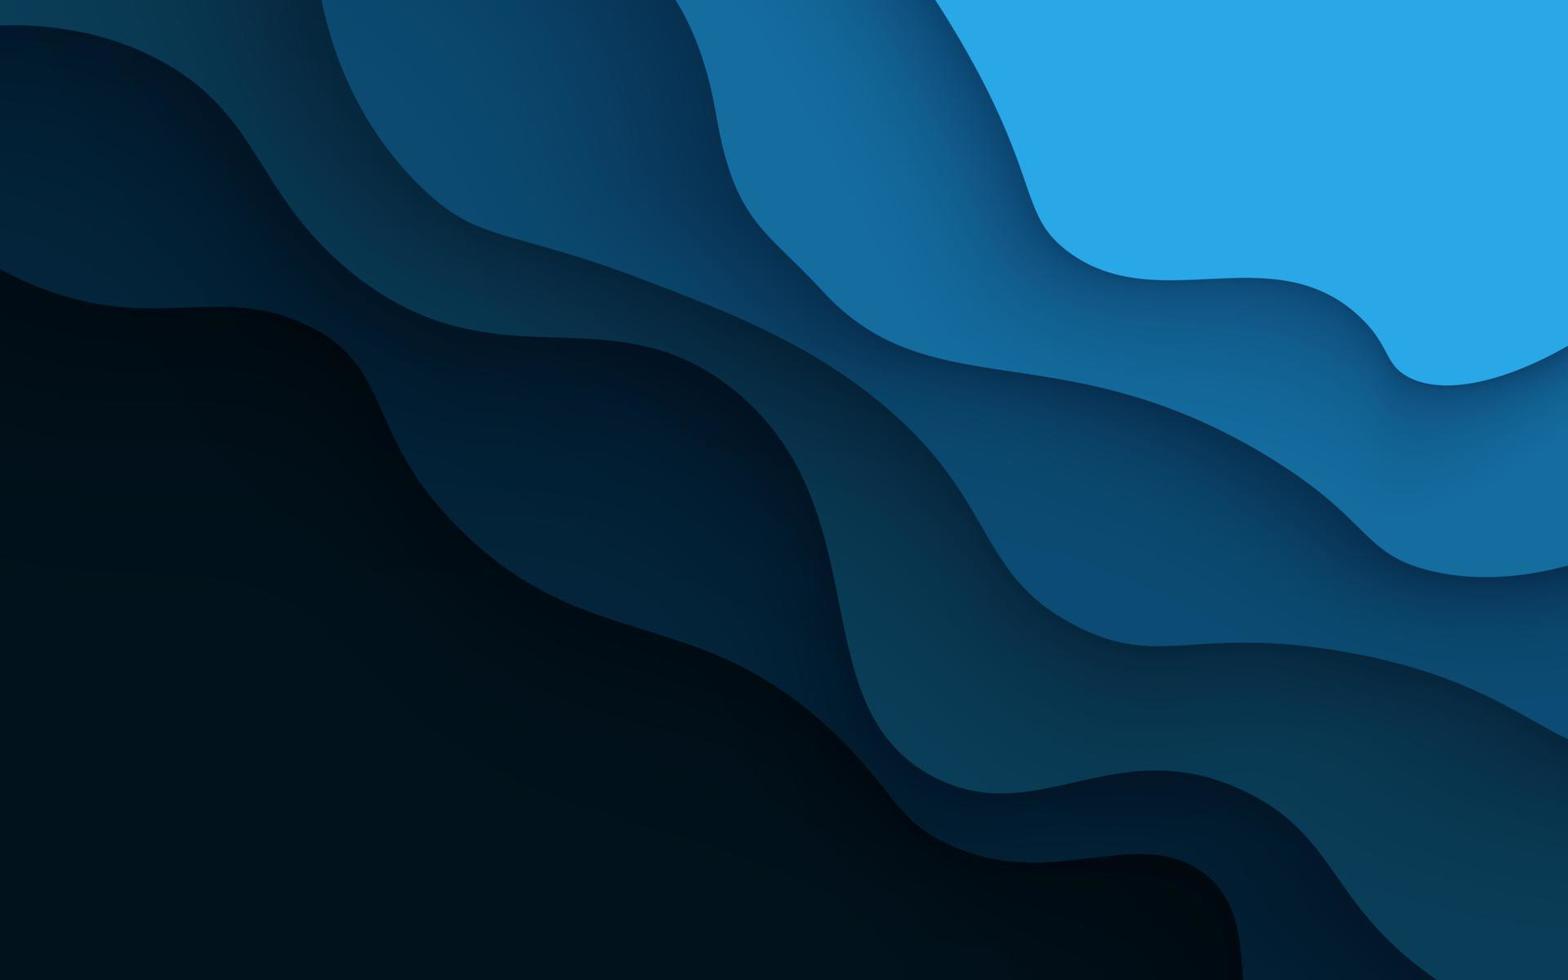 capas de corte de papel 3d de textura de color azul de múltiples capas en banner de vector degradado. diseño de fondo de arte de corte de papel abstracto para plantilla de sitio web. concepto de mapa topográfico o corte de papel de origami suave